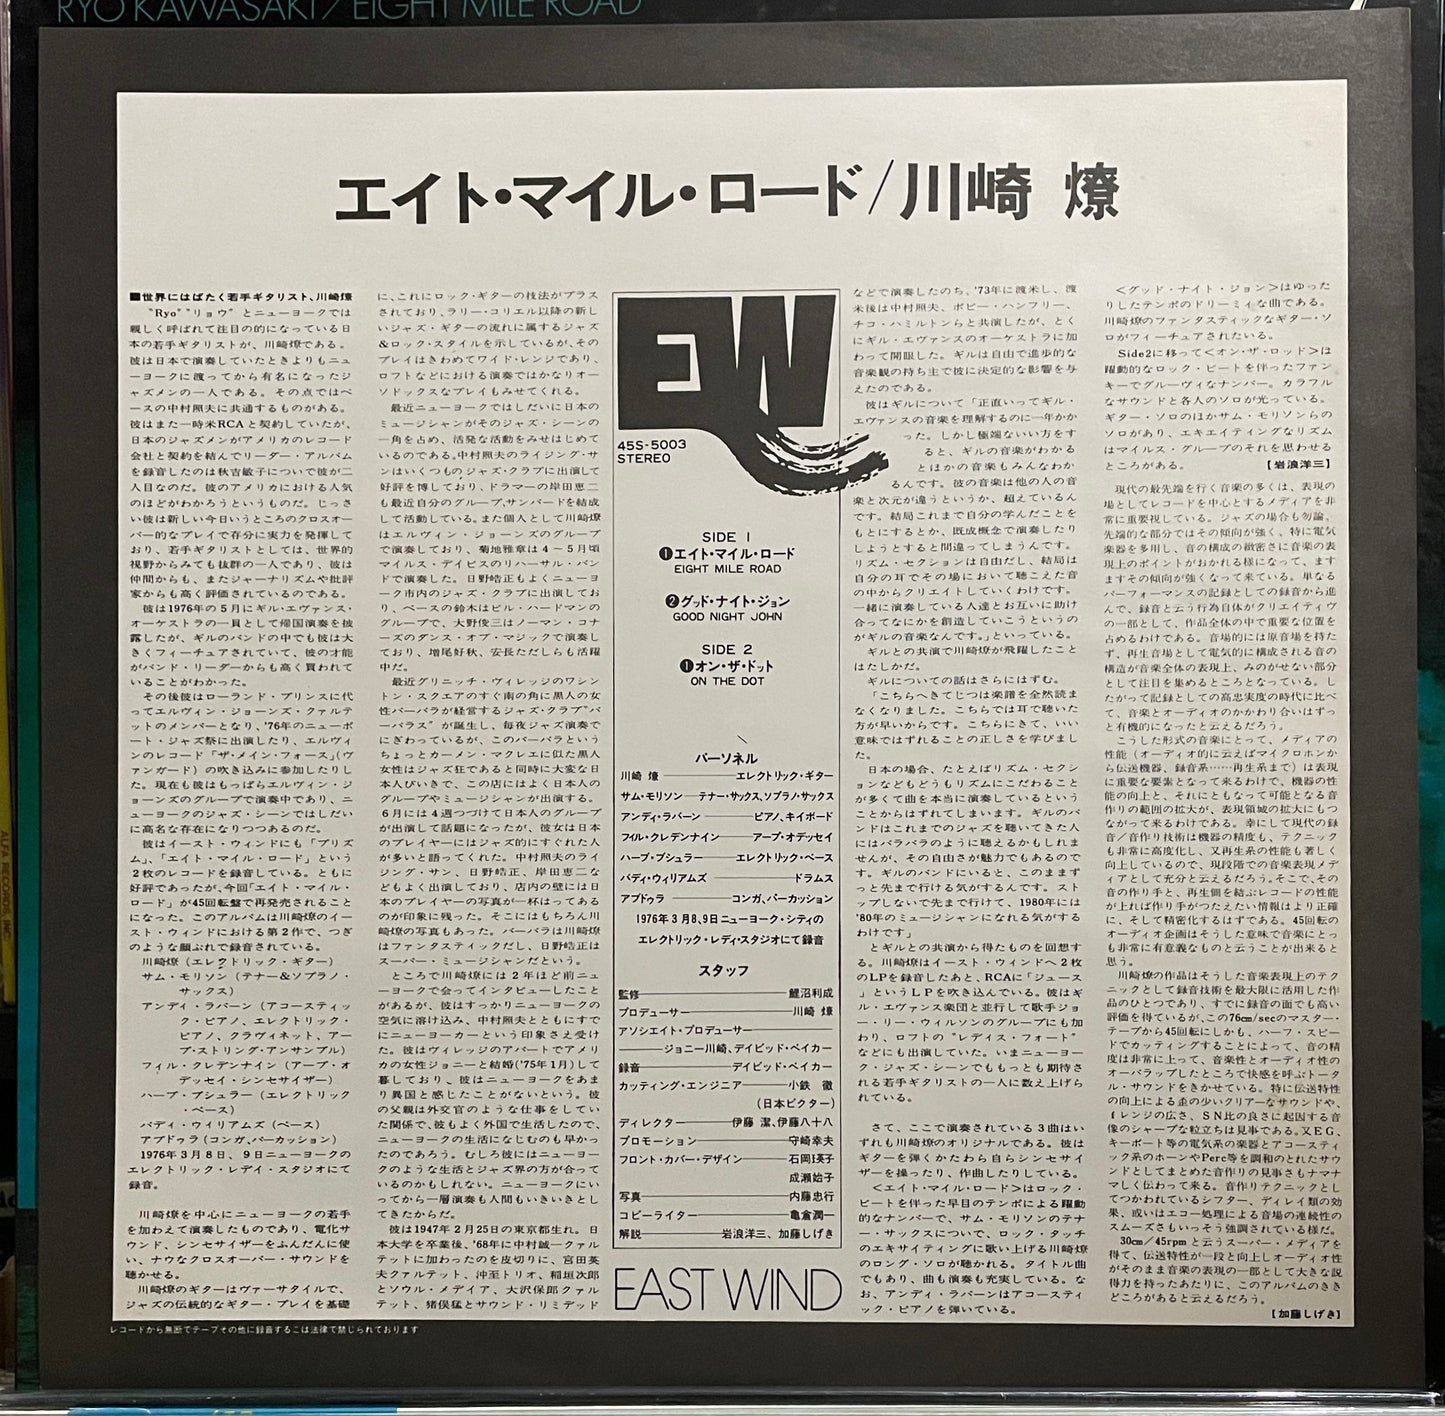 Ryo Kawasaki “Eight Mile Road” (1976)